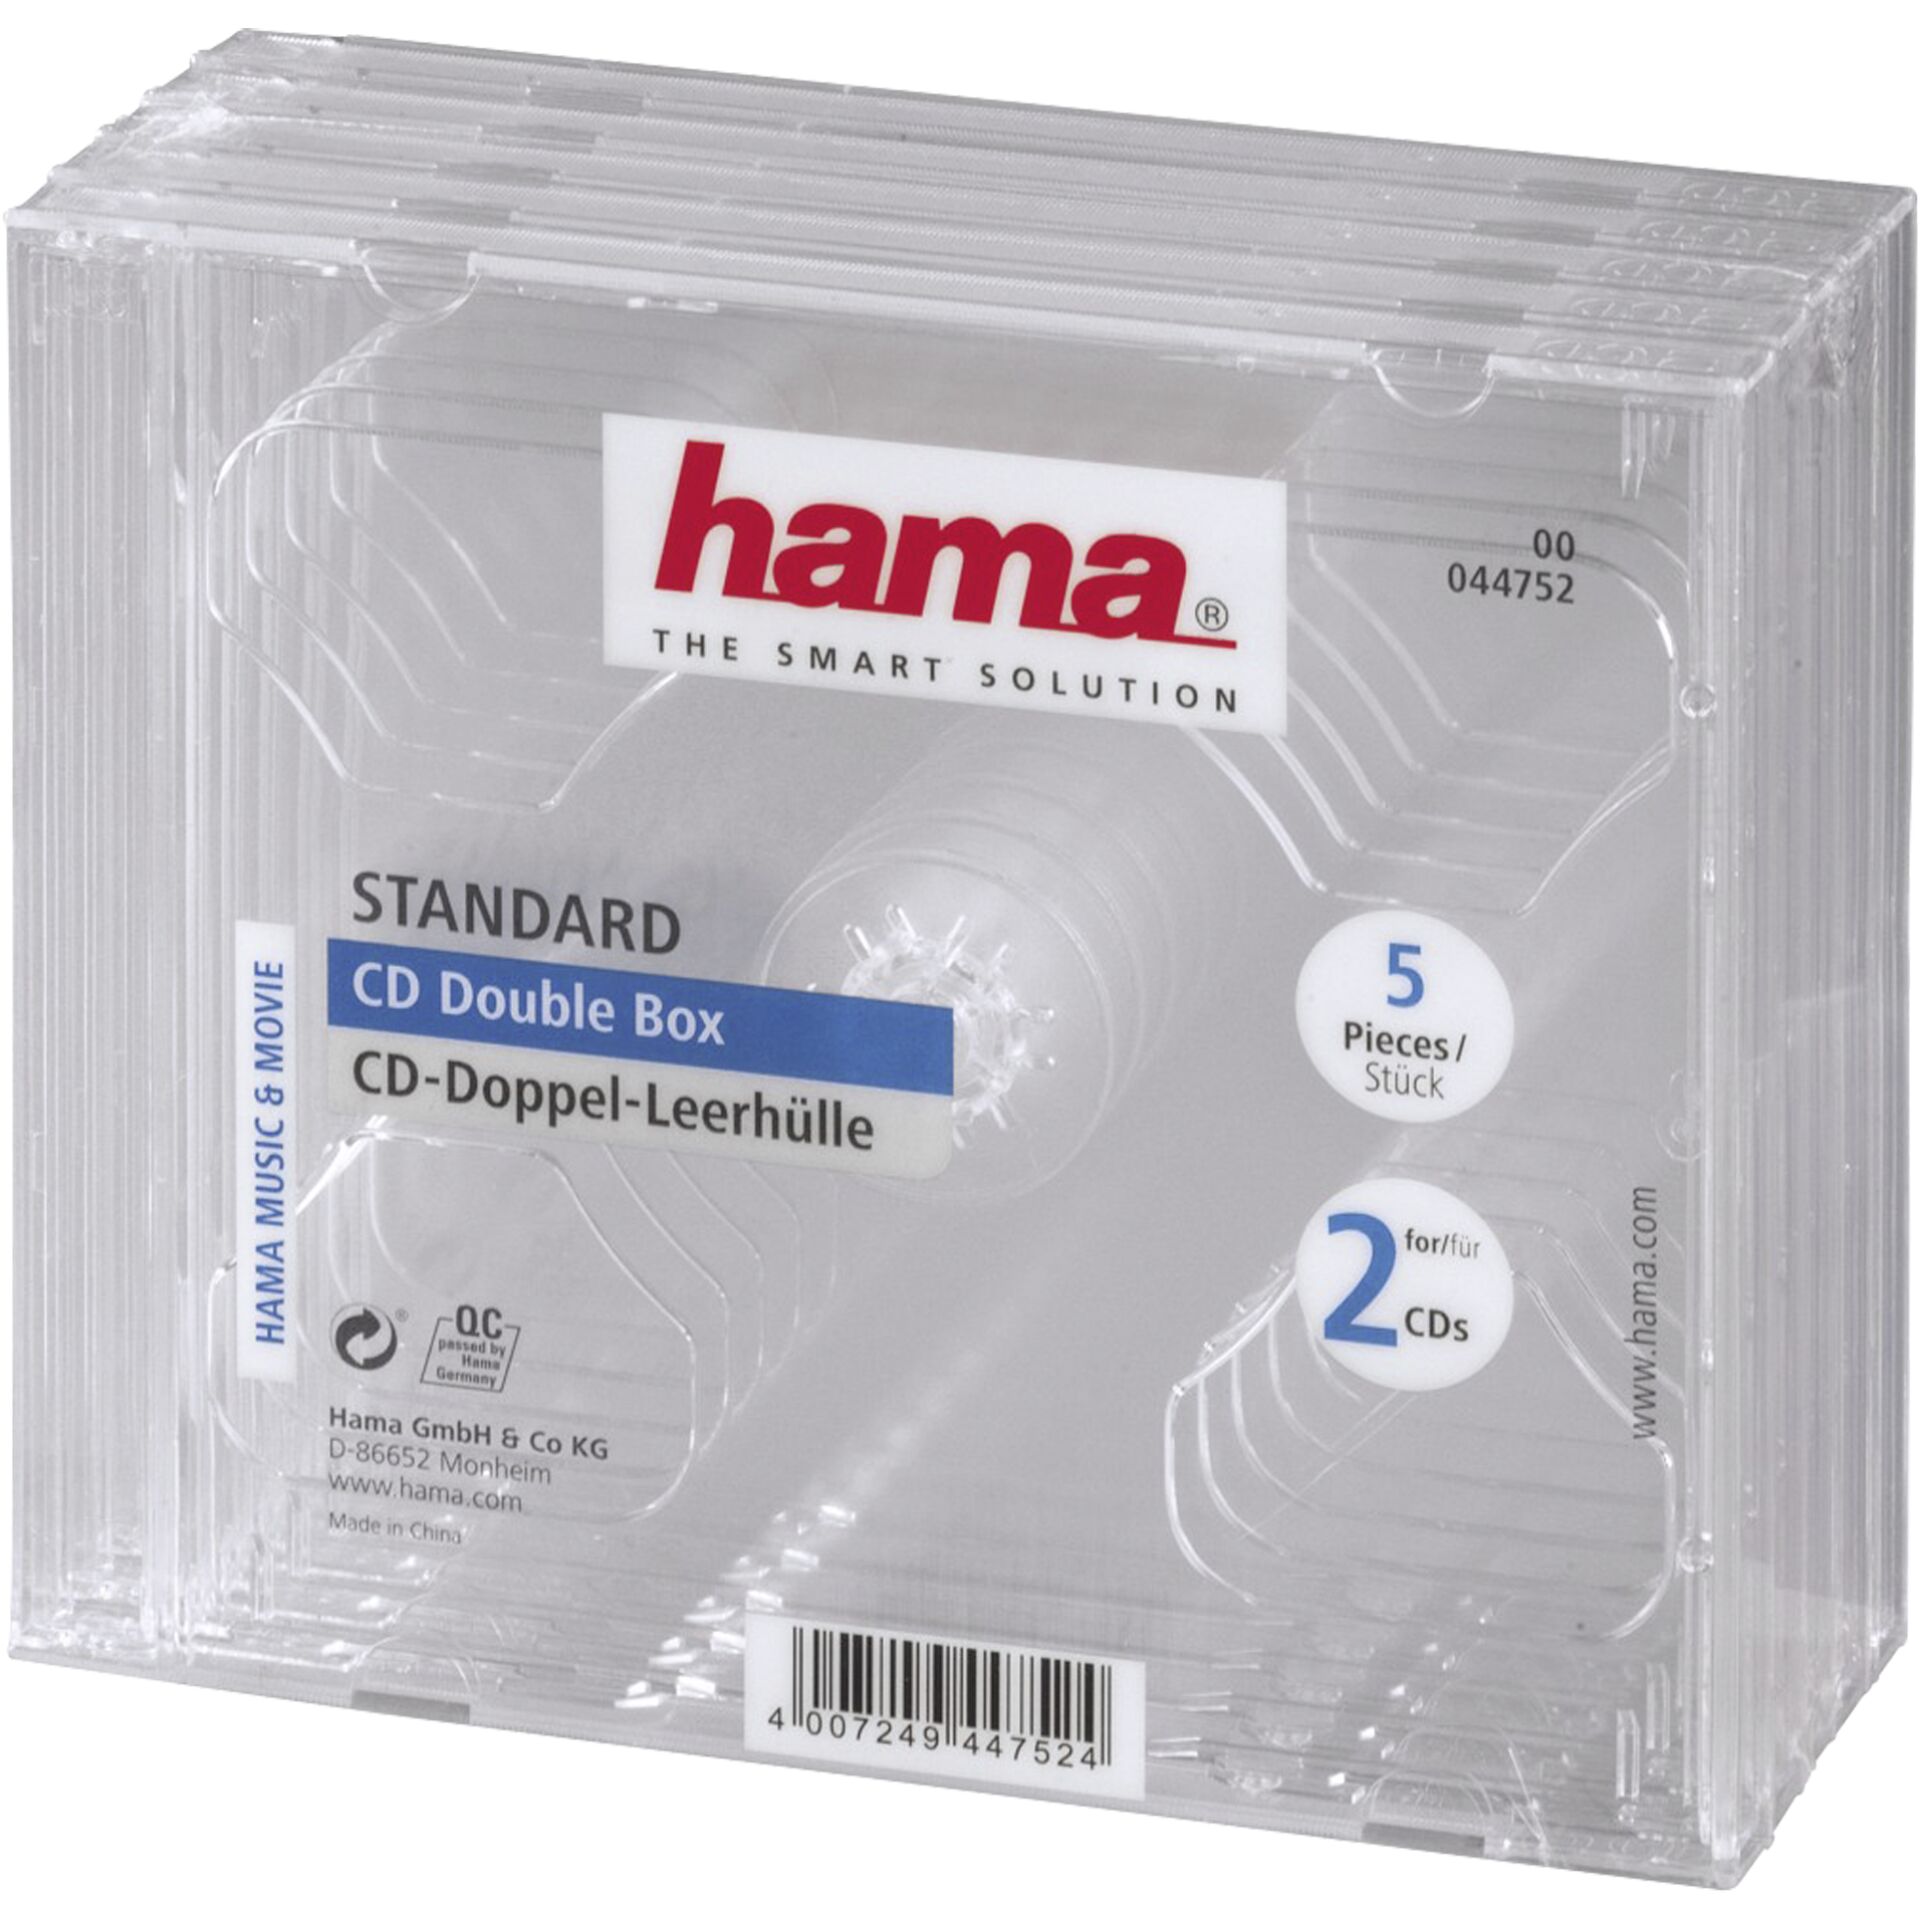 Hama CD-Double-Box 5er-Pack Transparent Jewel-Case     44752